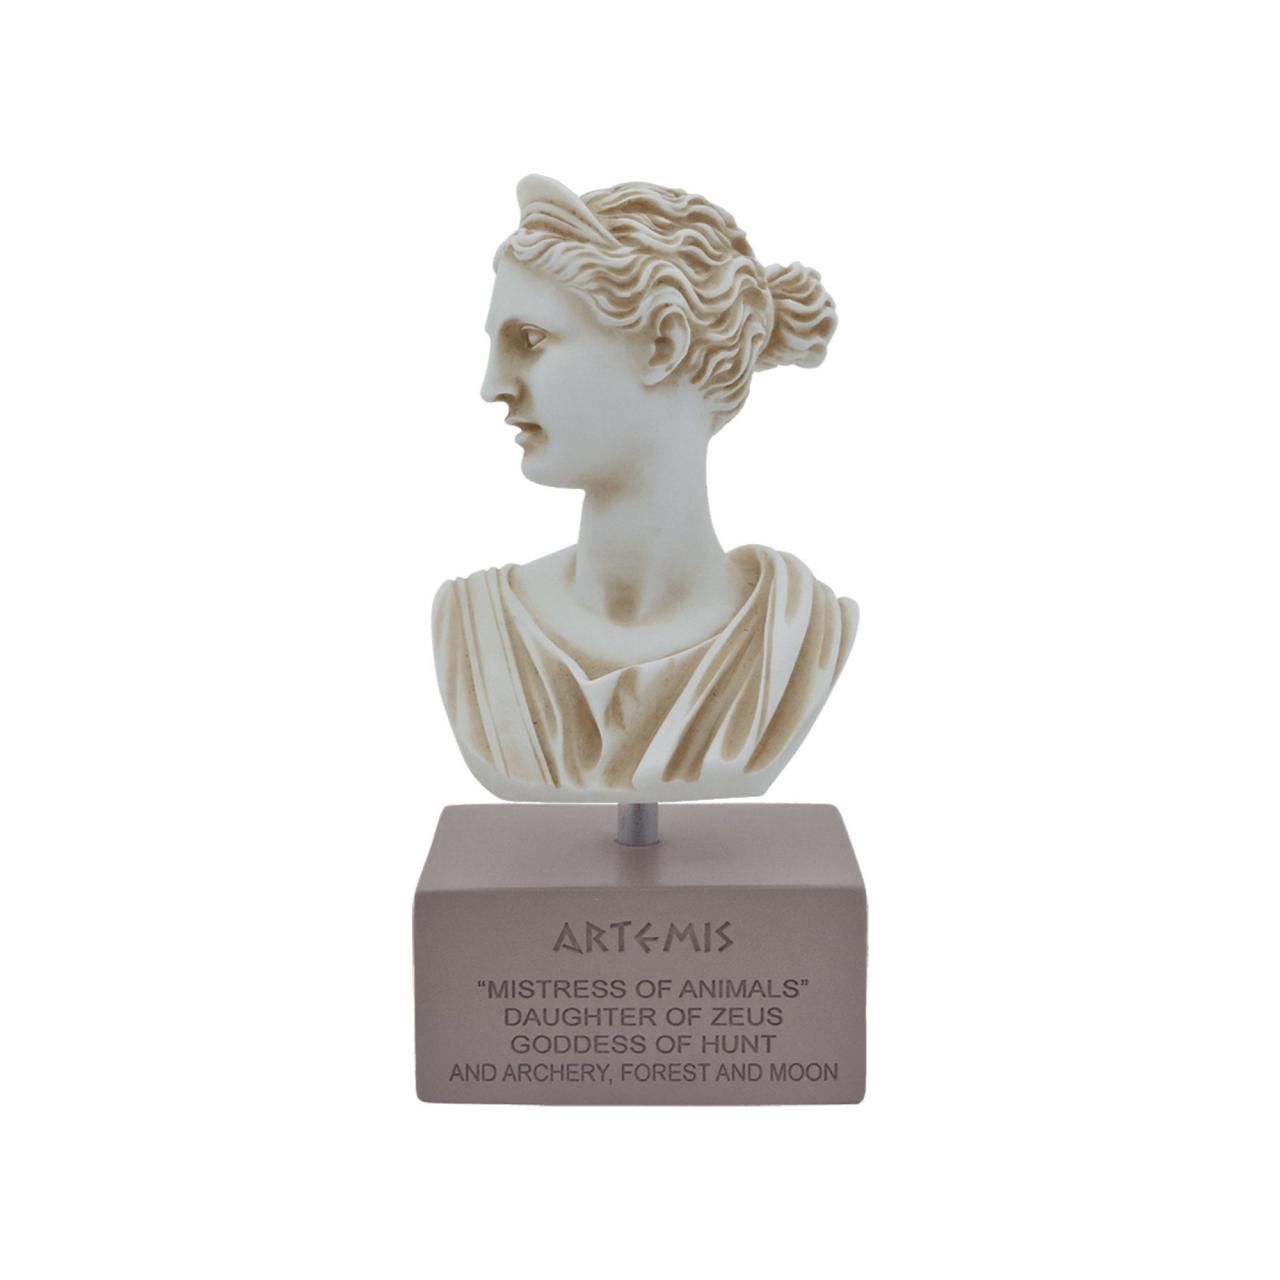 Artemis Diana Goddess Statue Greek Handmade Alabaster Bust Head Sculpture 18cm - 7.09"